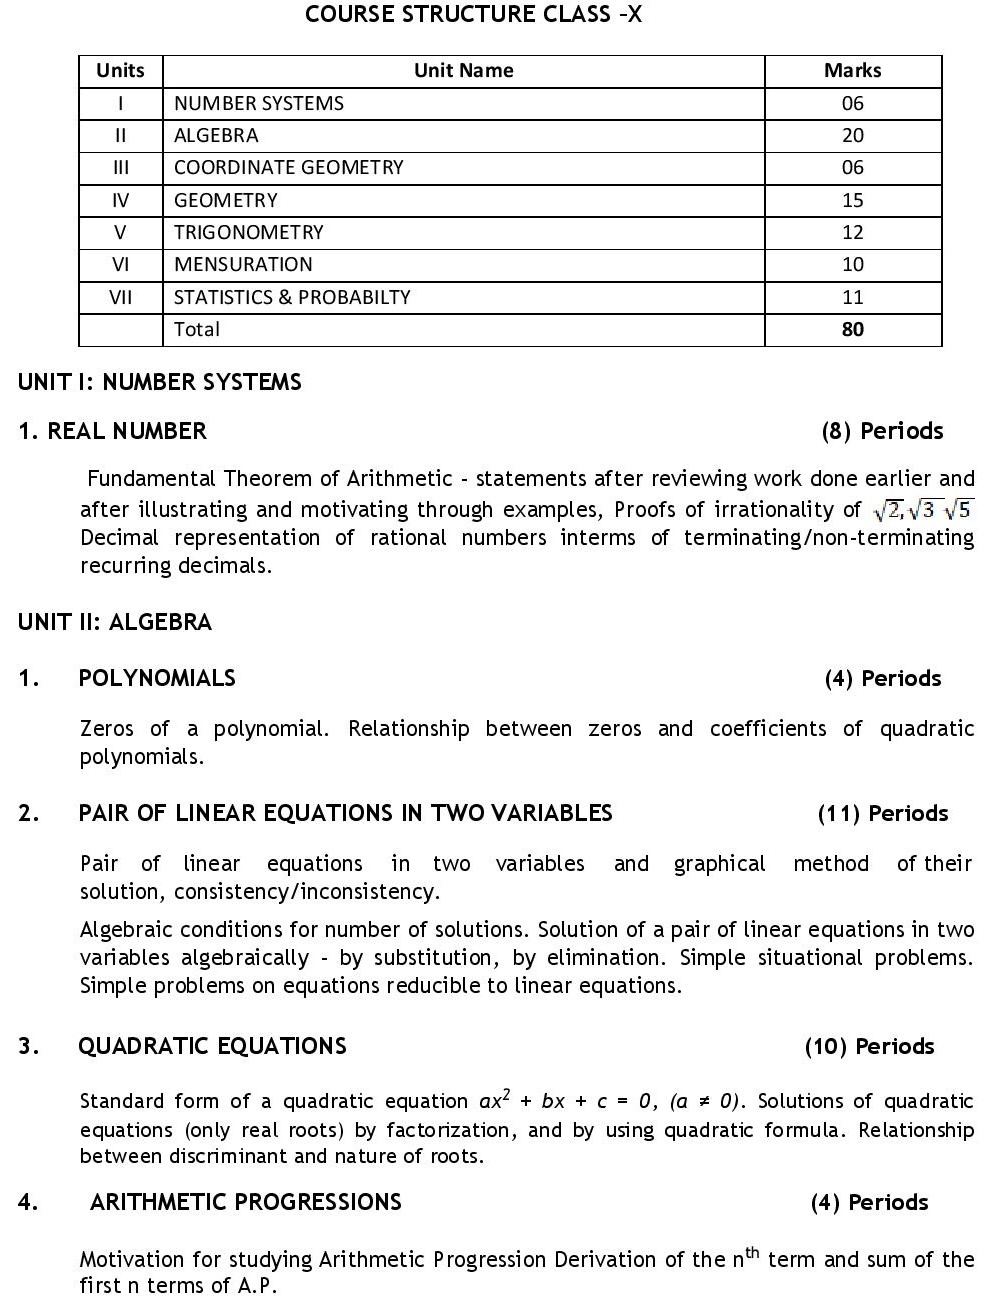 syllabus-of-narayana-scholastic-aptitude-test-2023-2024-eduvark